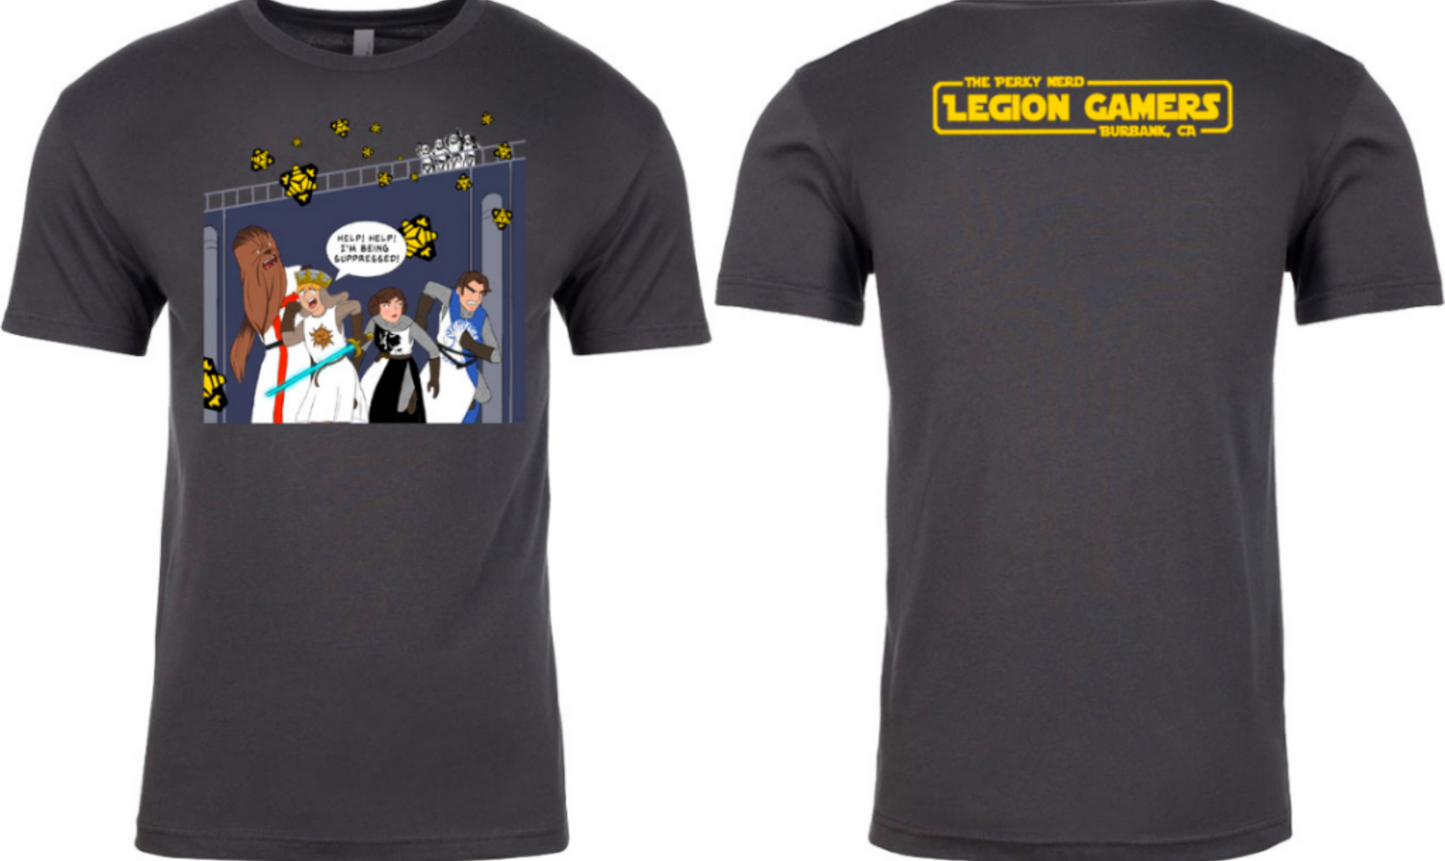 The Perky Nerd Legion Gamers Exclusive Shirt